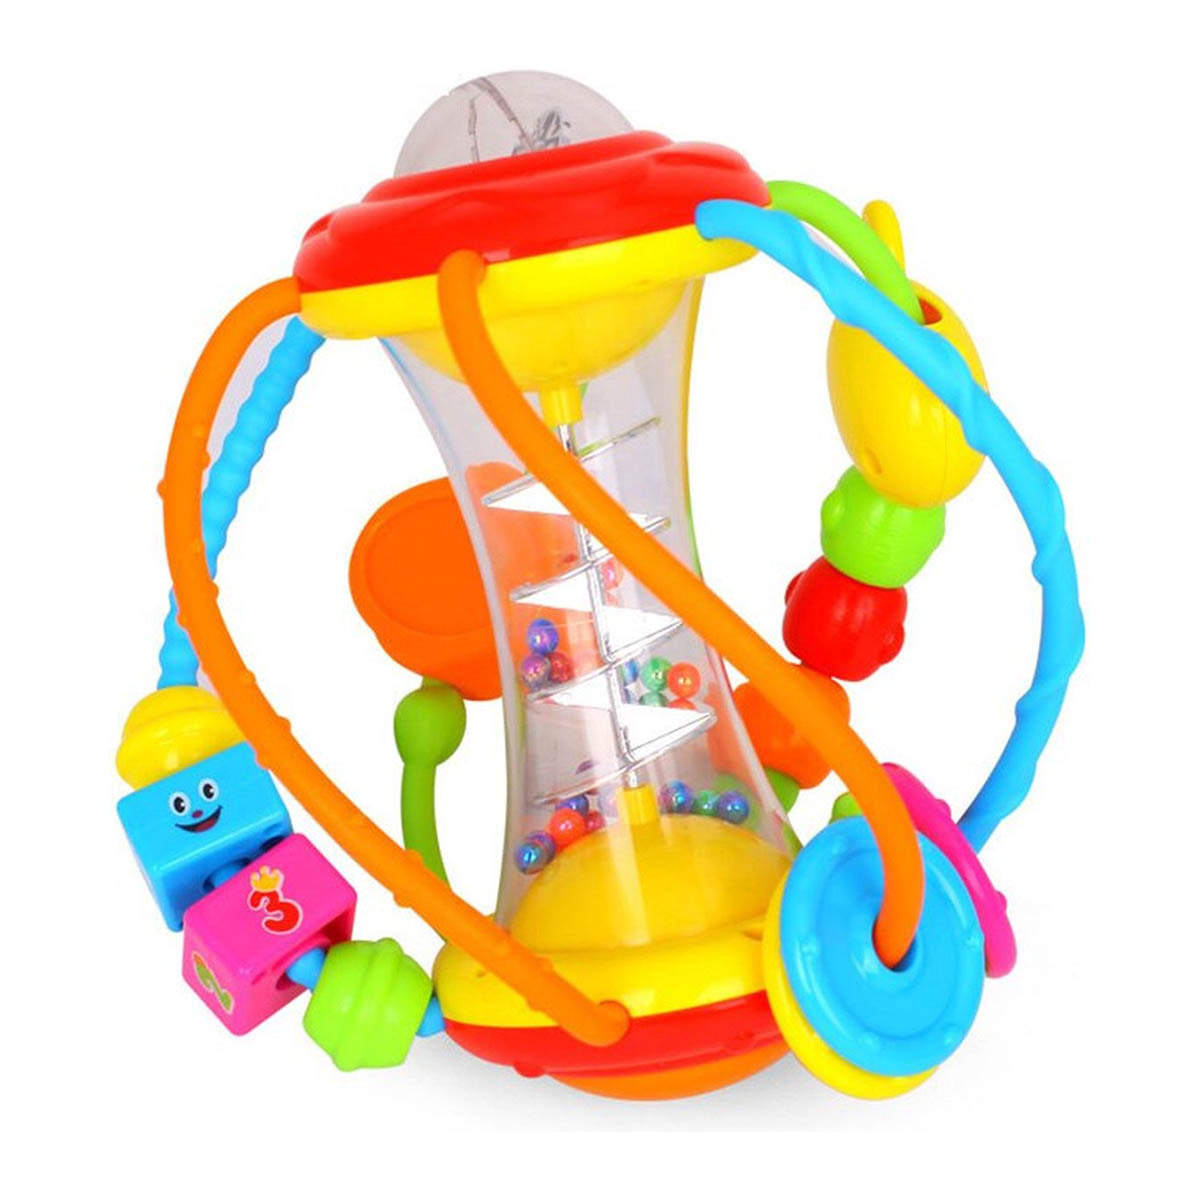 <tc>Ariko</tc> XL Baby Rattle - Developmental toy - Multifunctional - Colorful - Educational